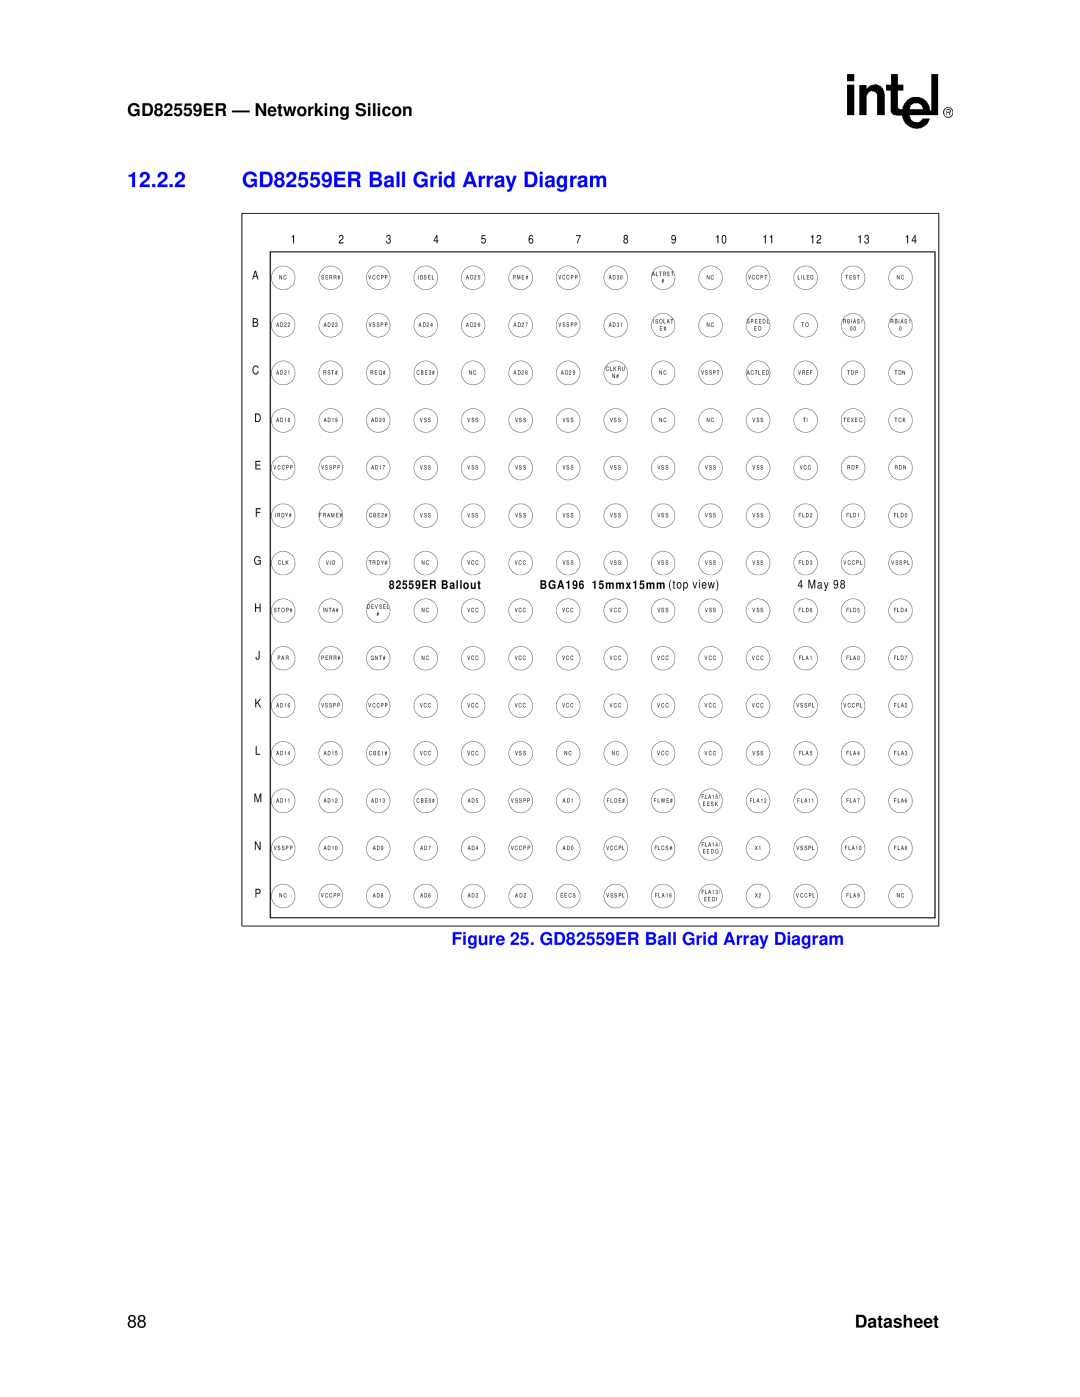 Intel manual 12.2.2 GD82559ER Ball Grid Array Diagram, GD82559ER - Networking Silicon, Datasheet, 82559ER Ballout 